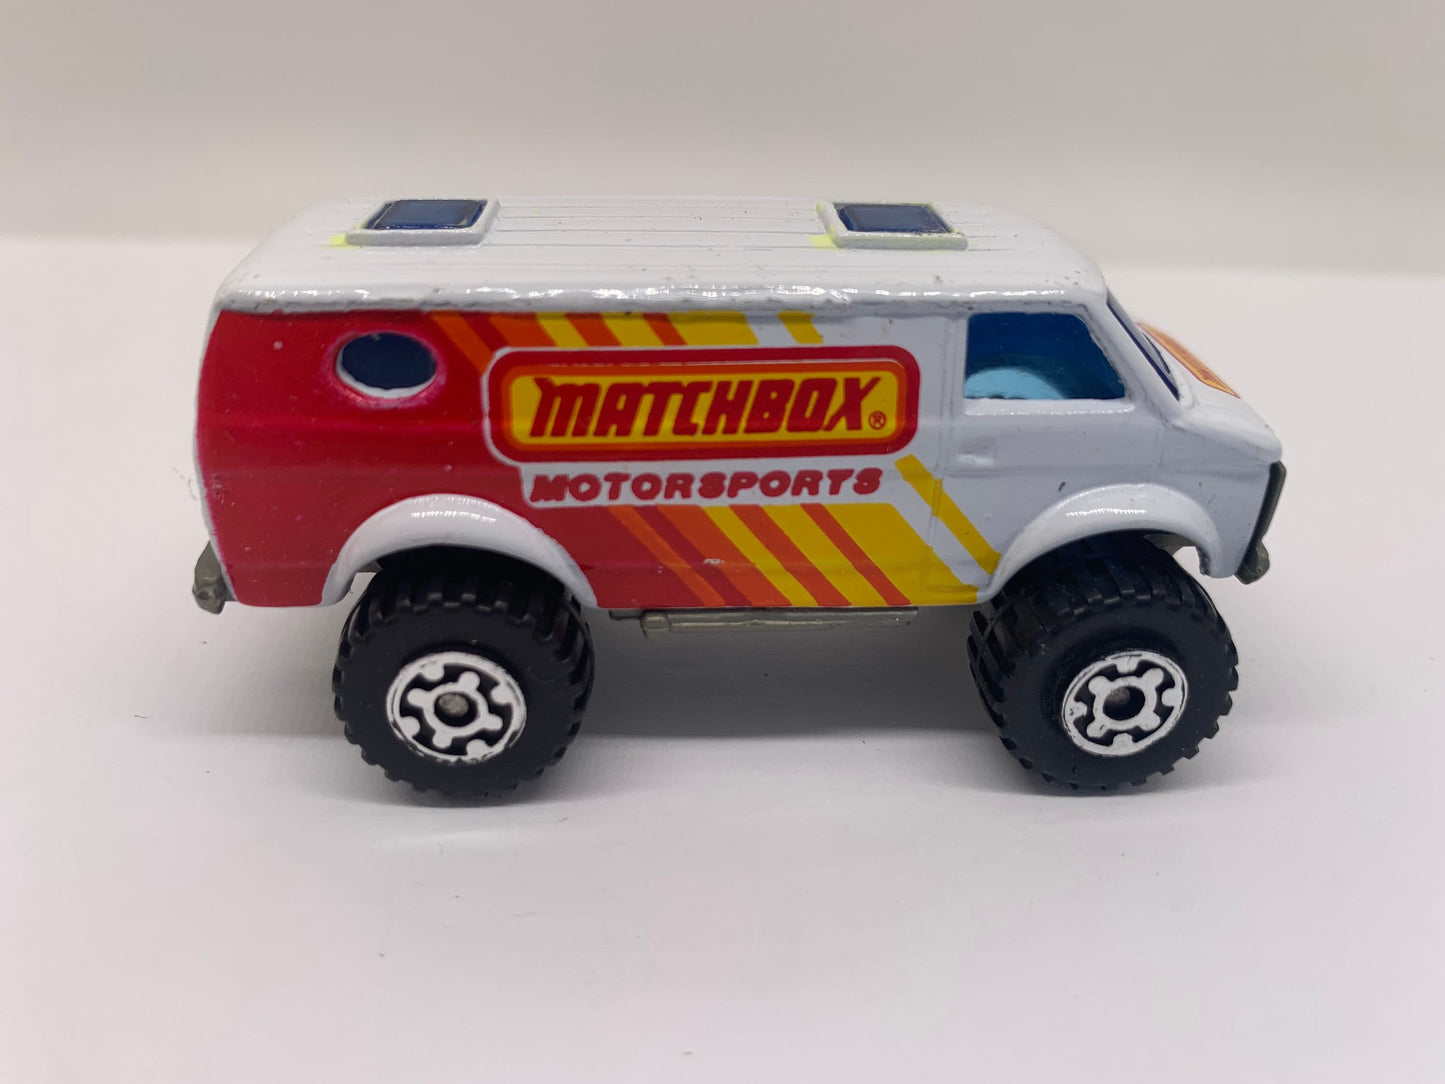 4x4 Chevy Van - Motorsports - Diecast Vintage - Diecast Collectible - Miniature Model Toy Car - Matchbox Car - Matchbox